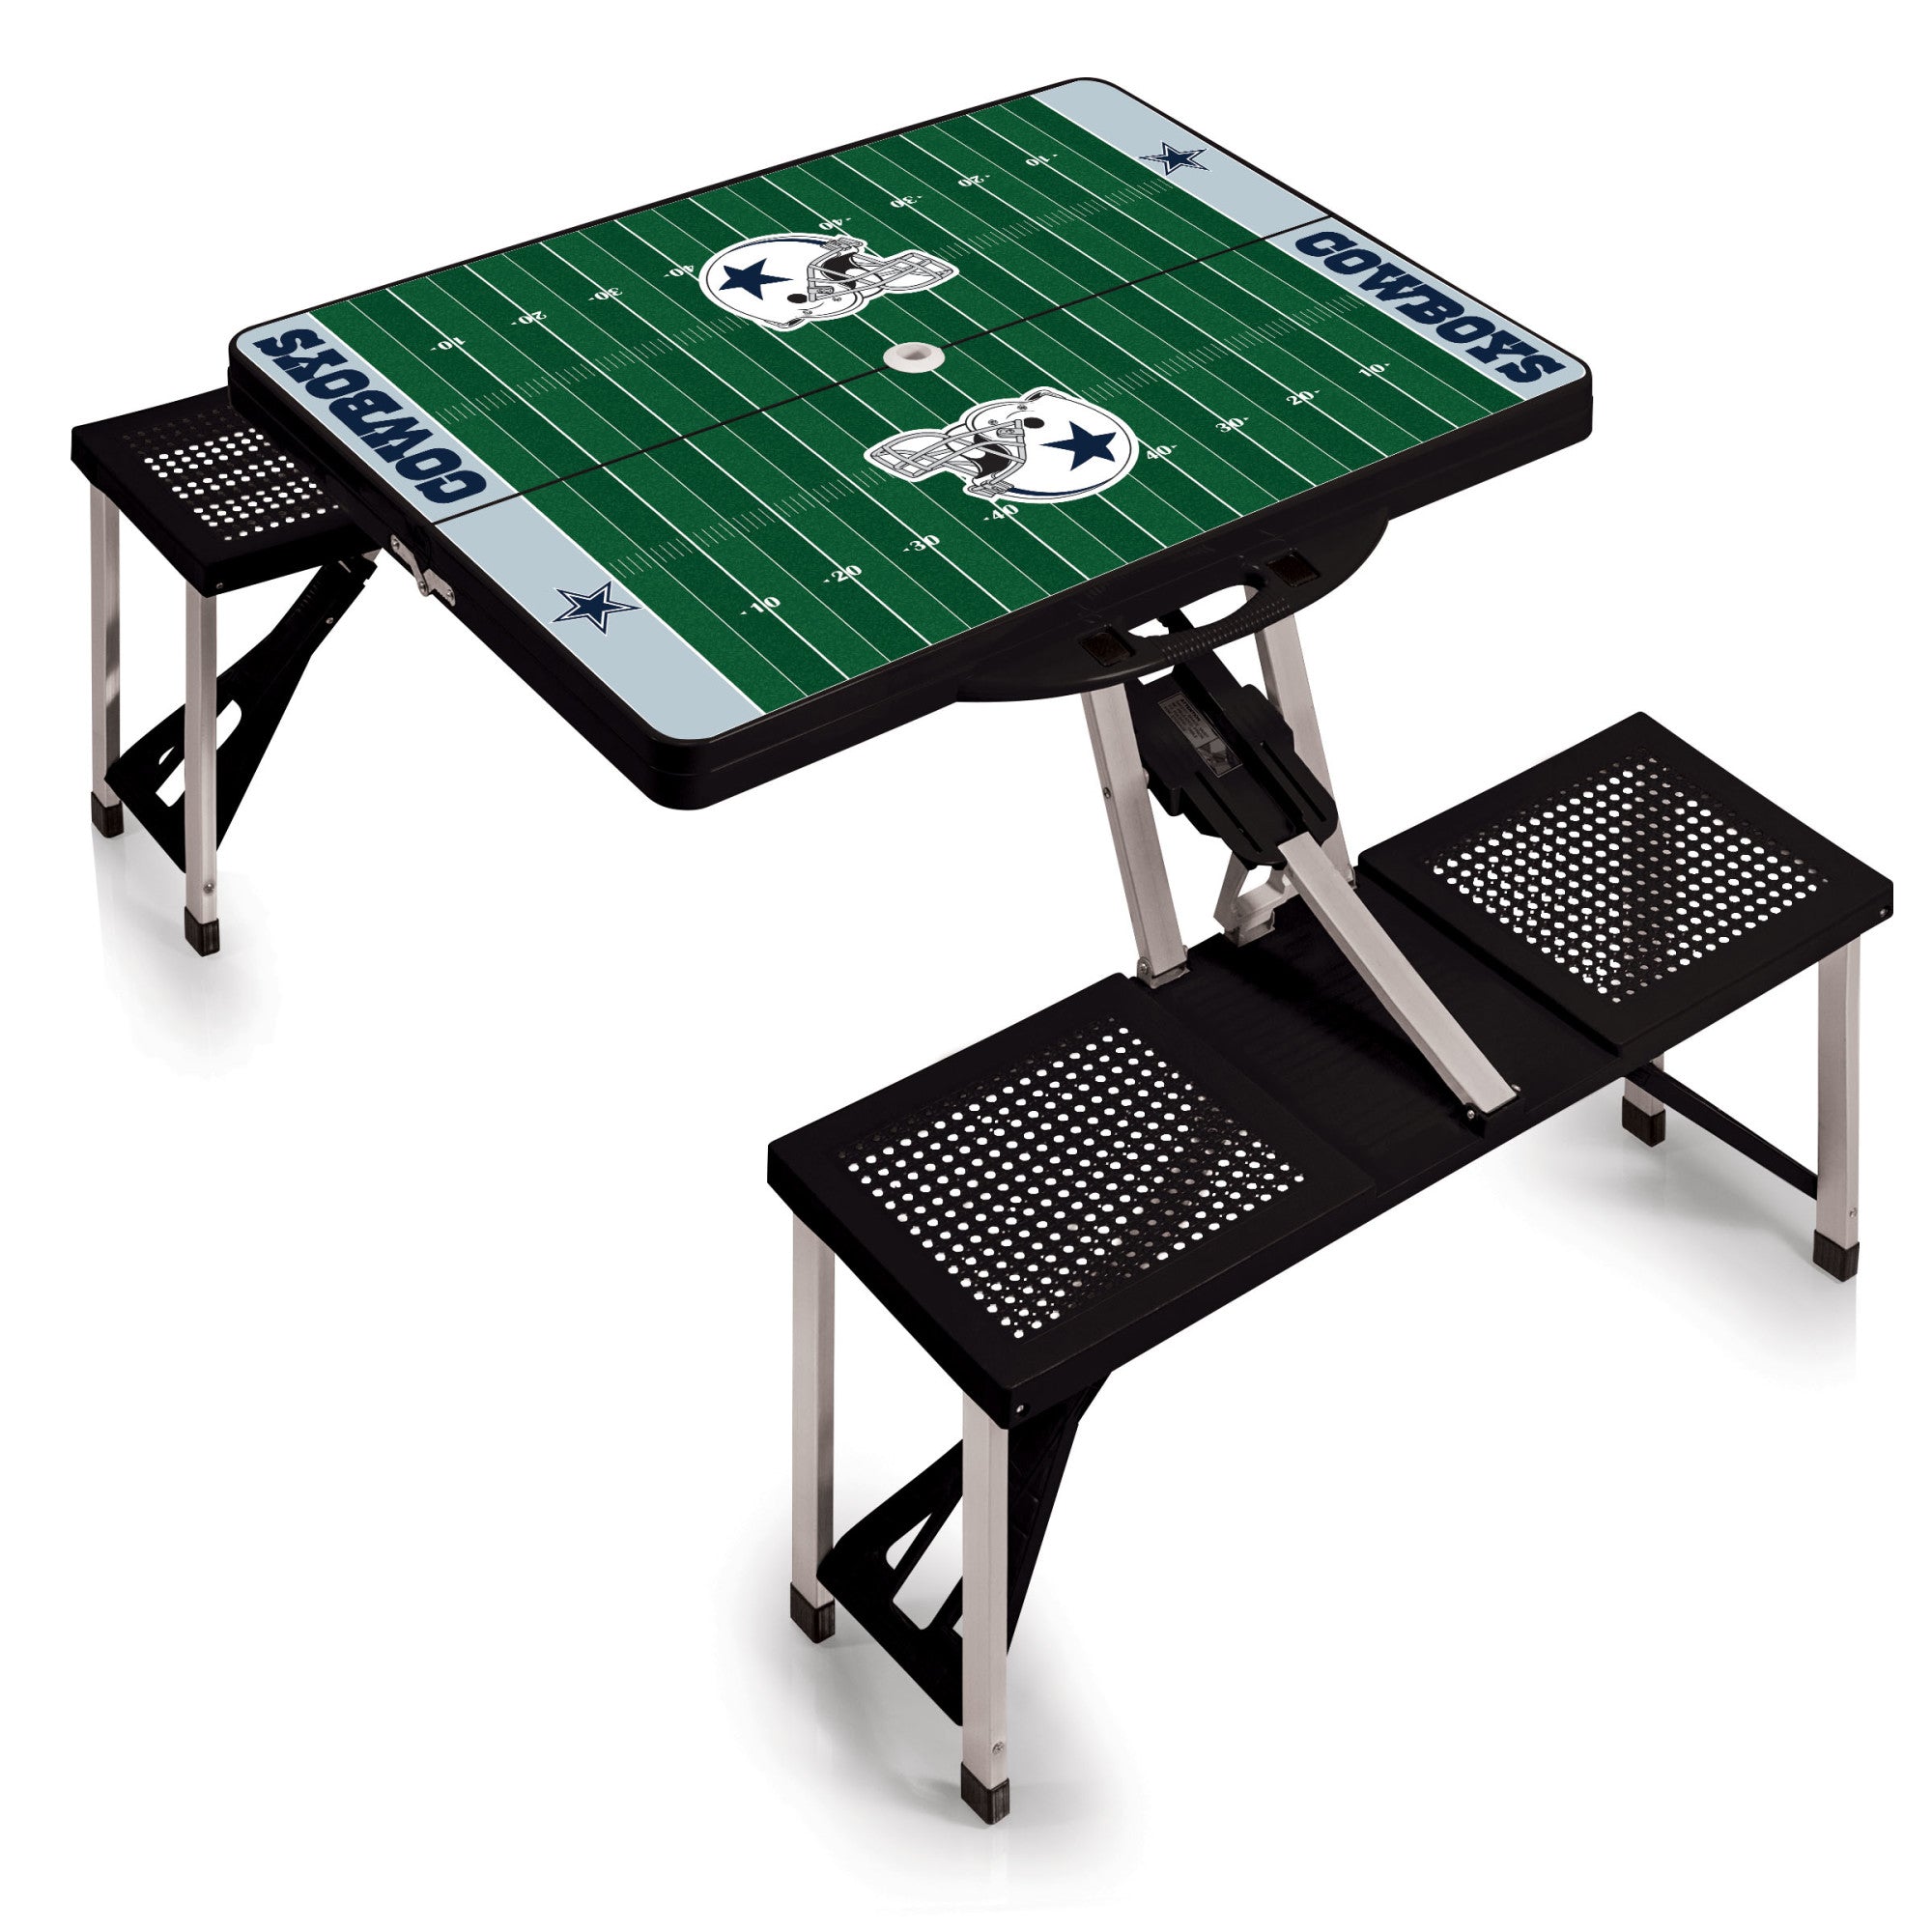 Dallas Cowboys - Picnic Table Portable Folding Table with Seats and Umbrella